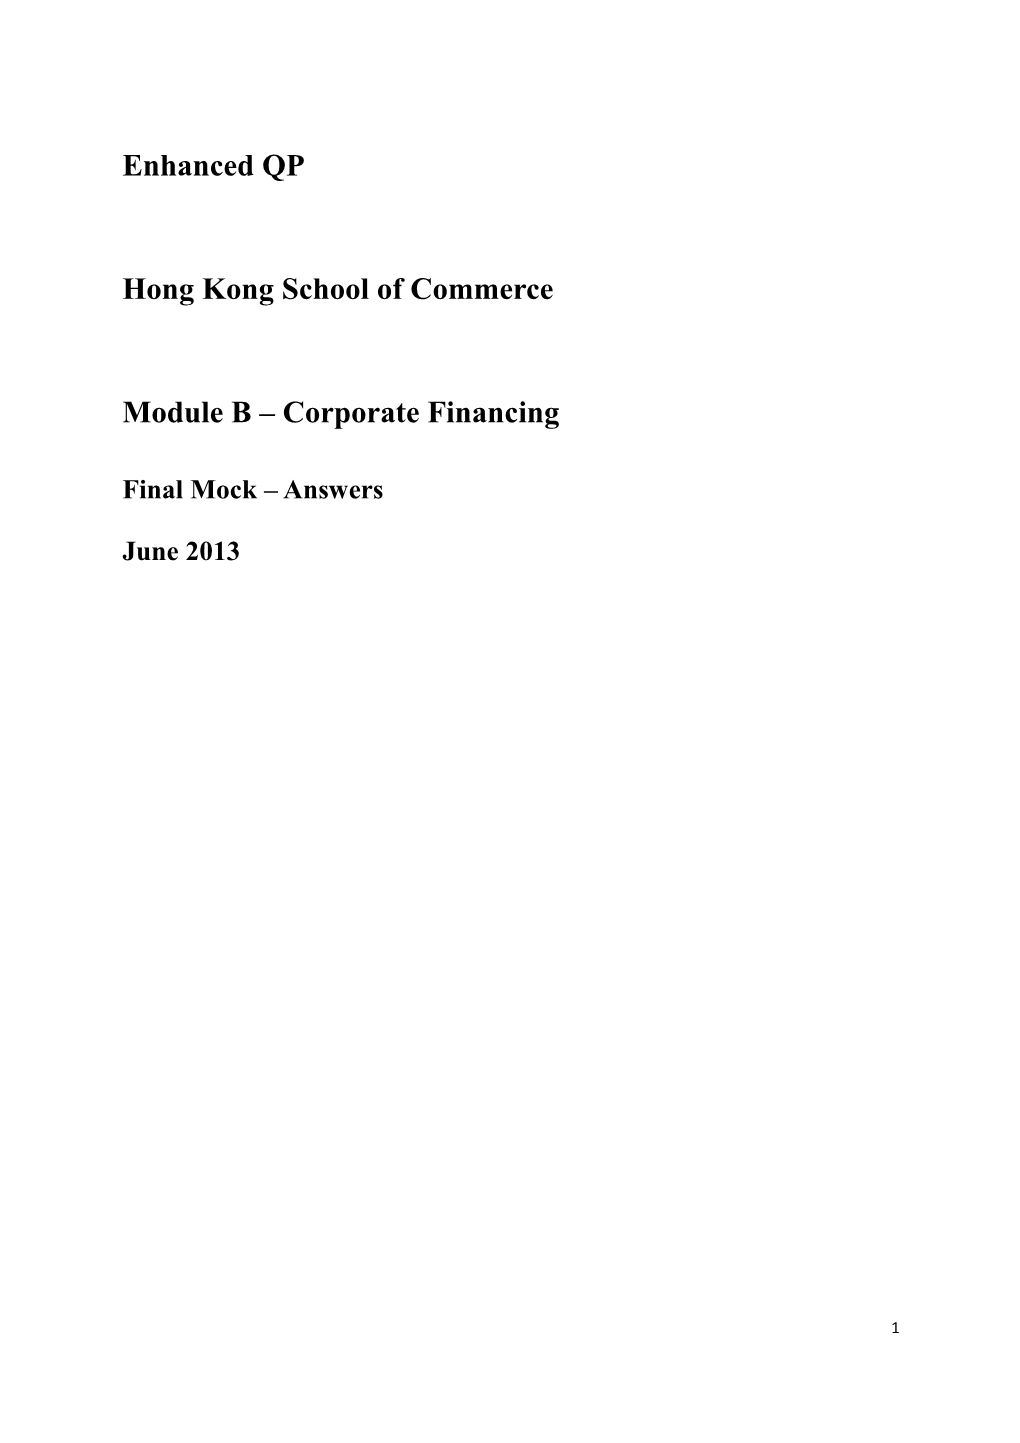 Hong Kong School of Commerce s1